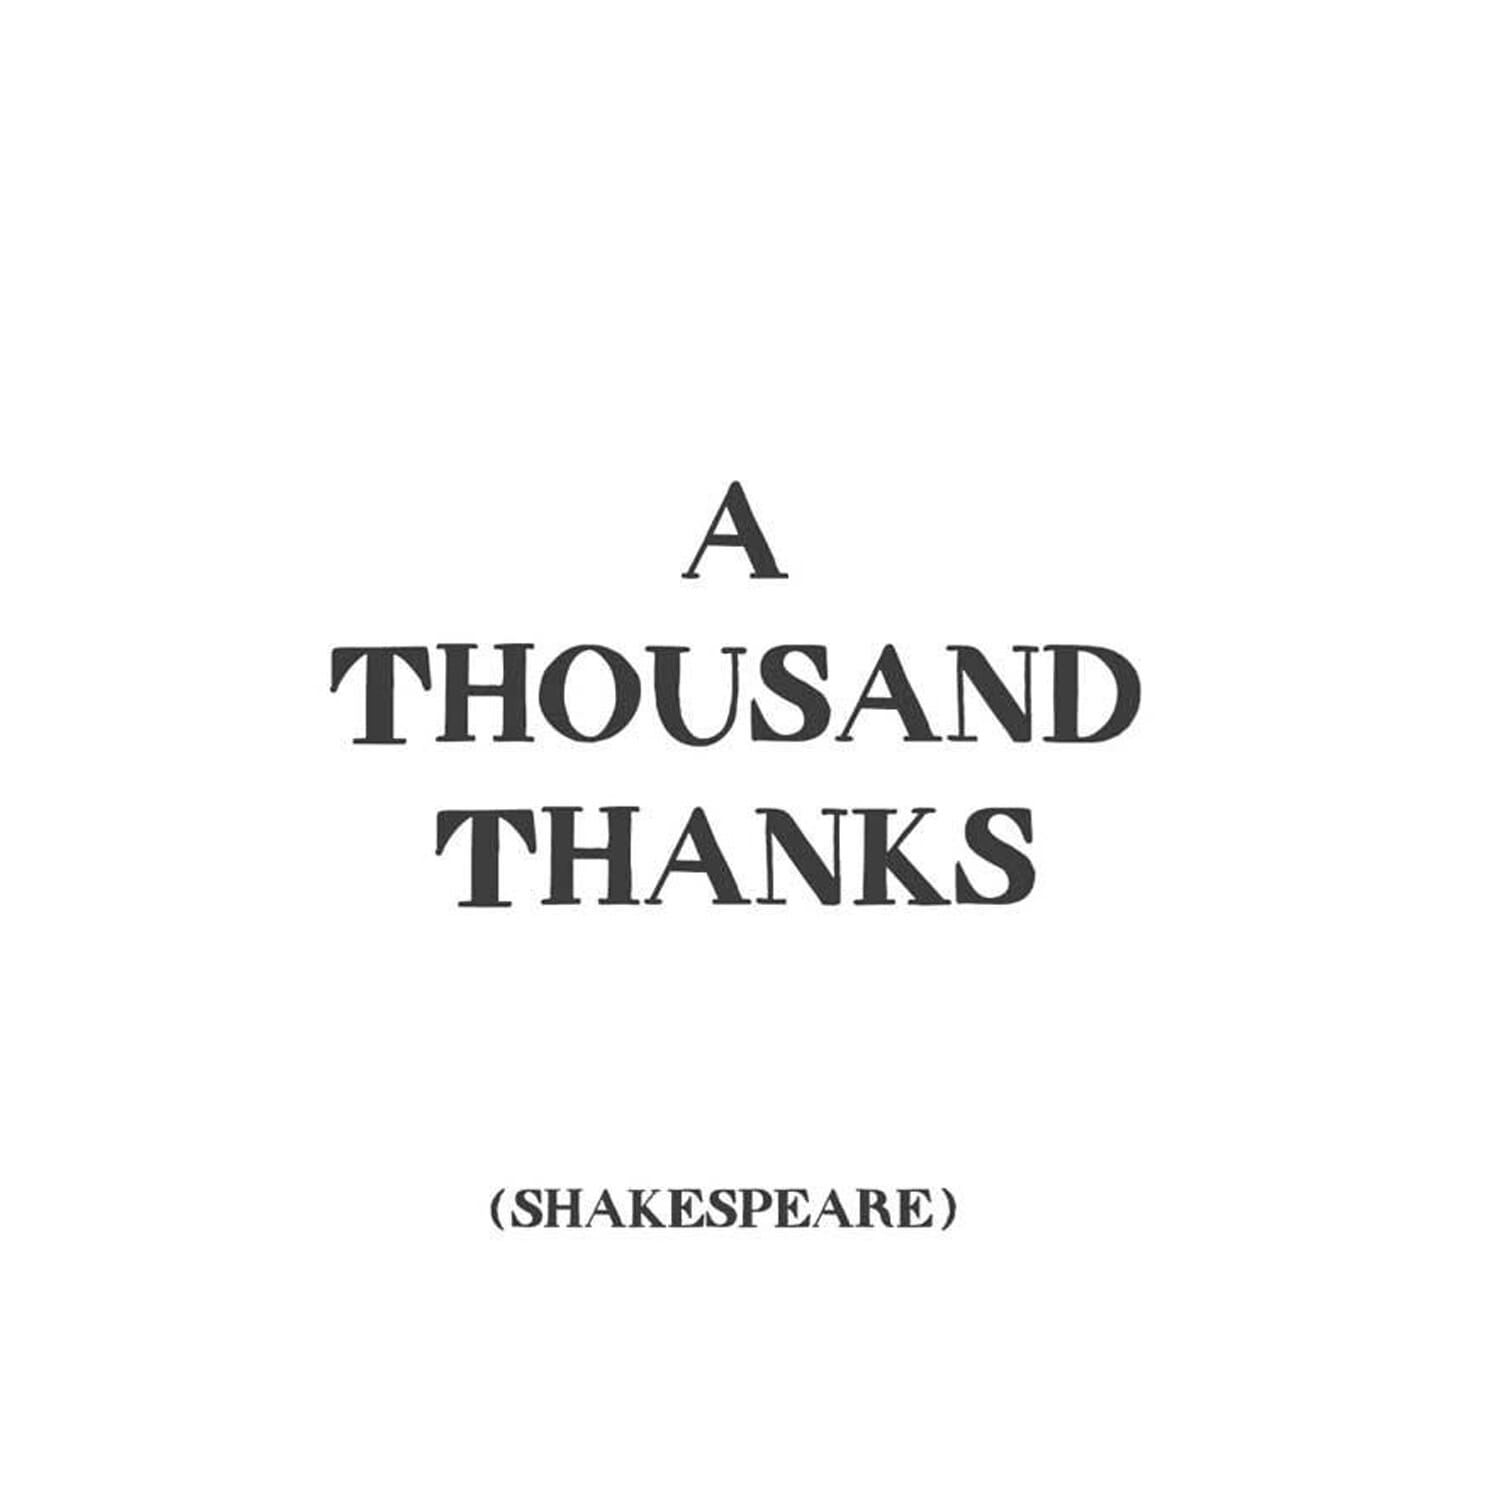 Shakespeare / Thousand Card